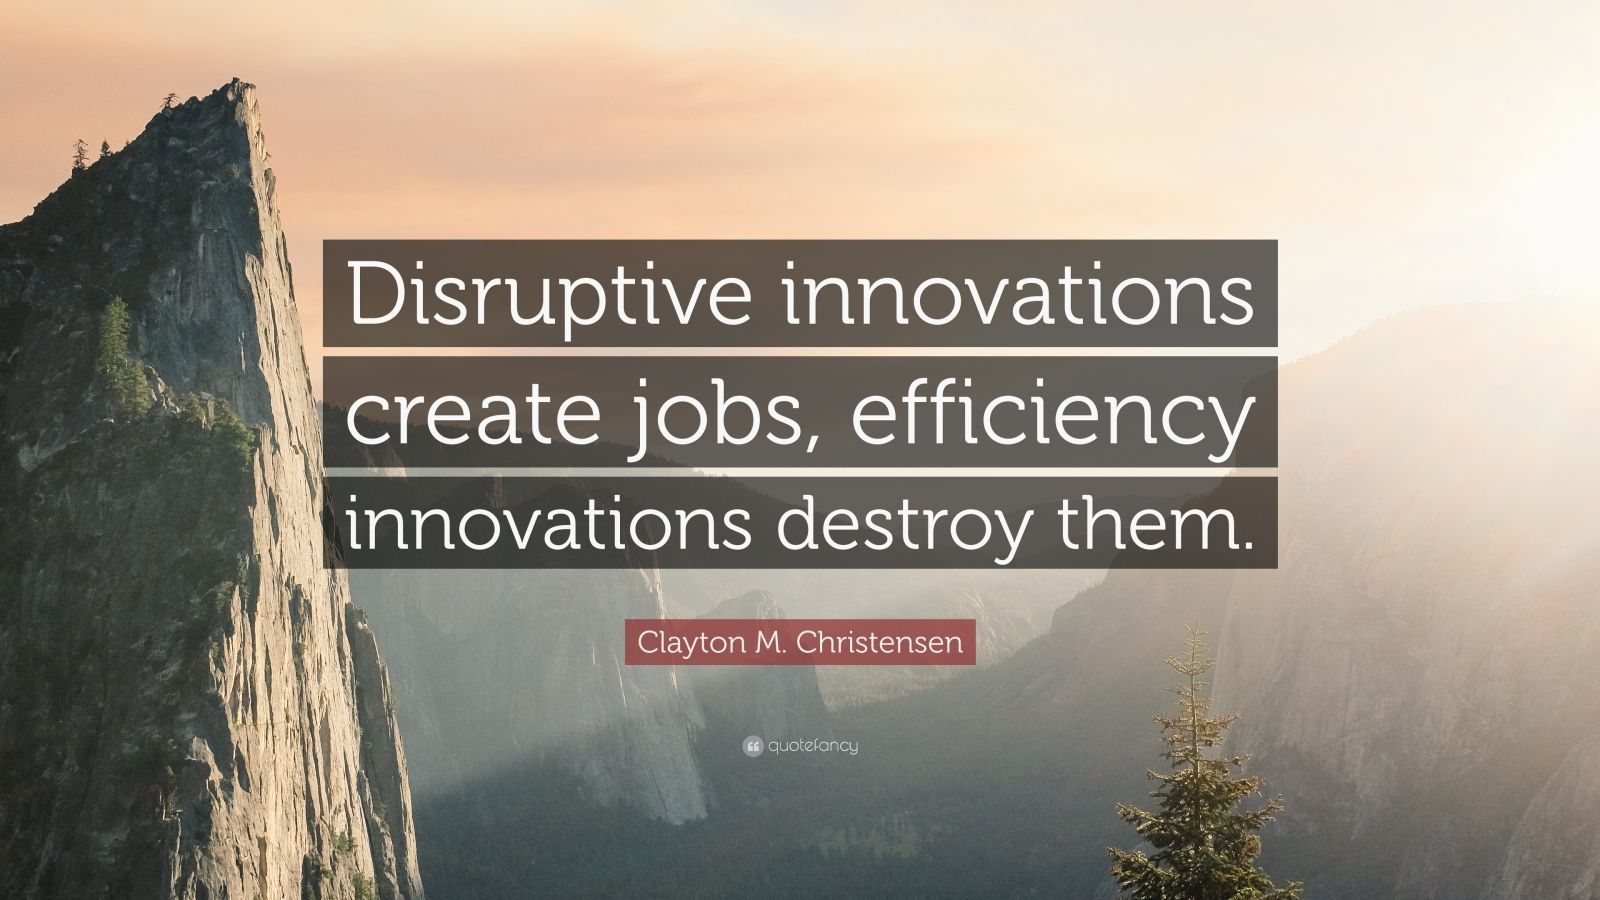 Clayton M. Christensen Quote: “Disruptive innovations create jobs